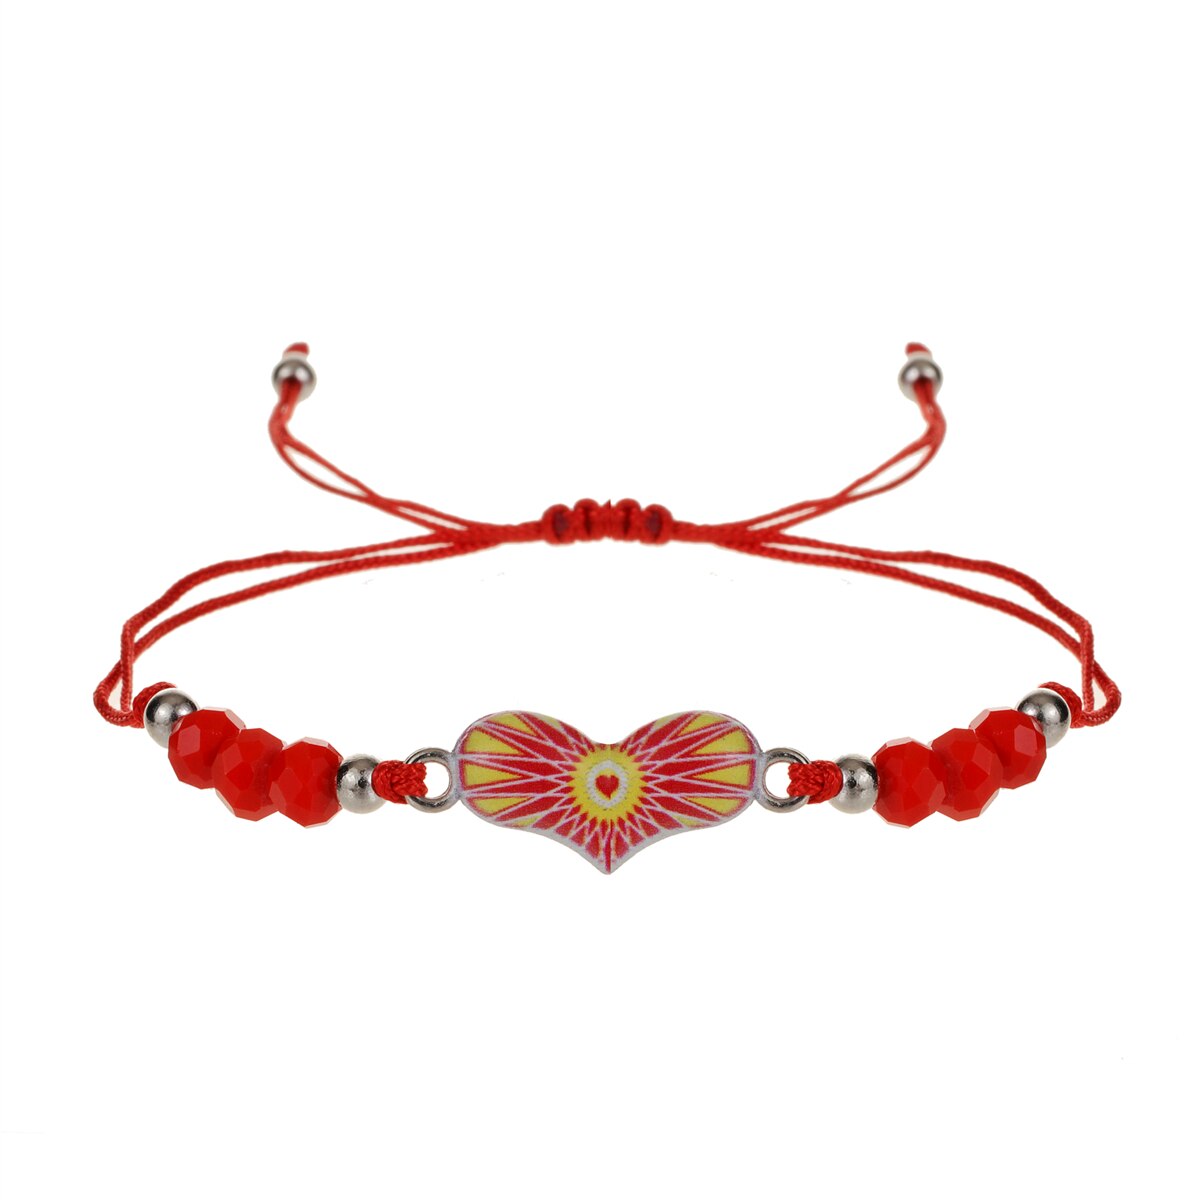 Enamel Charms Elastic Heart Pendant Bracelet for Women Adjustable Braided Rope Chain Crystal Bead Wristband Bracelet Jewelry